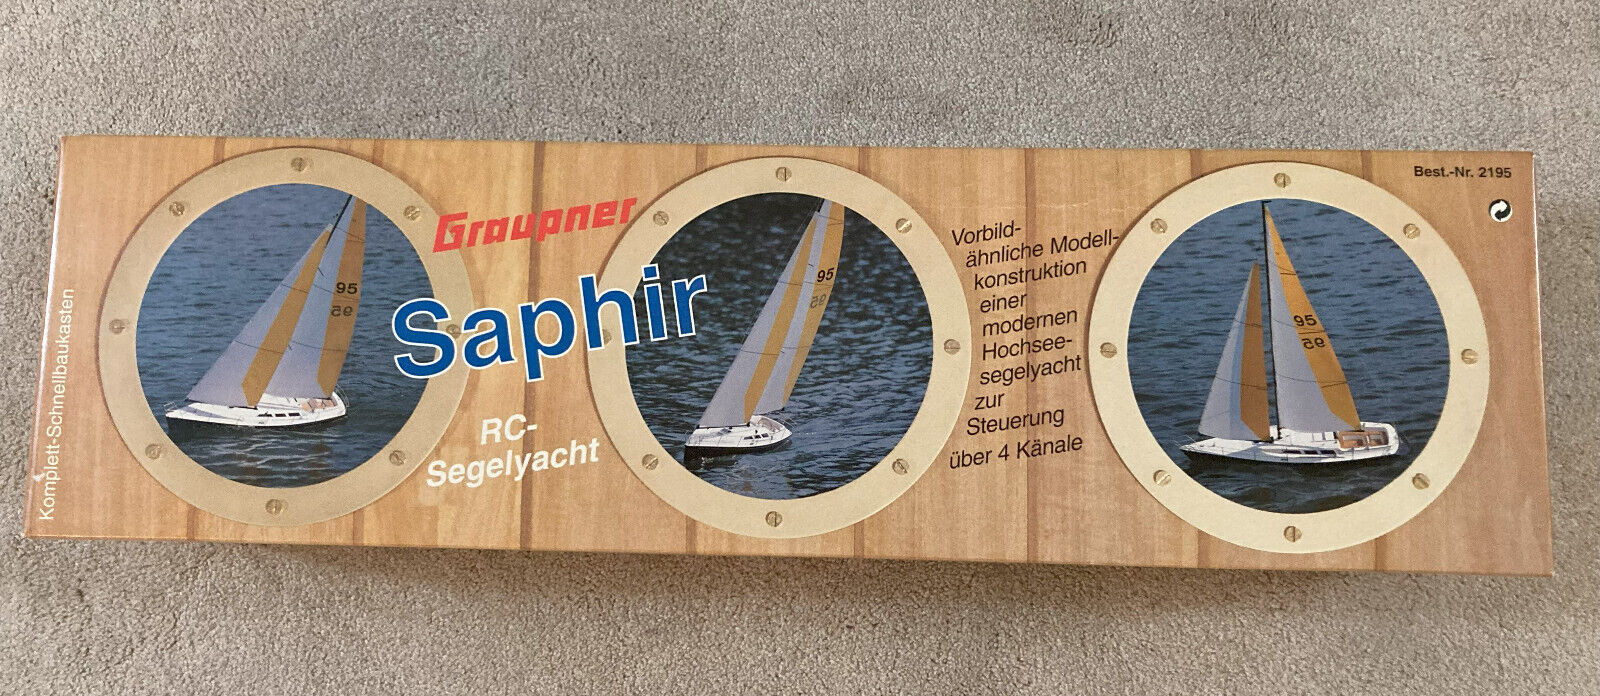 NEW Huge Graupner Saphir sail boat model kit for RC w/extras NIB Graupner